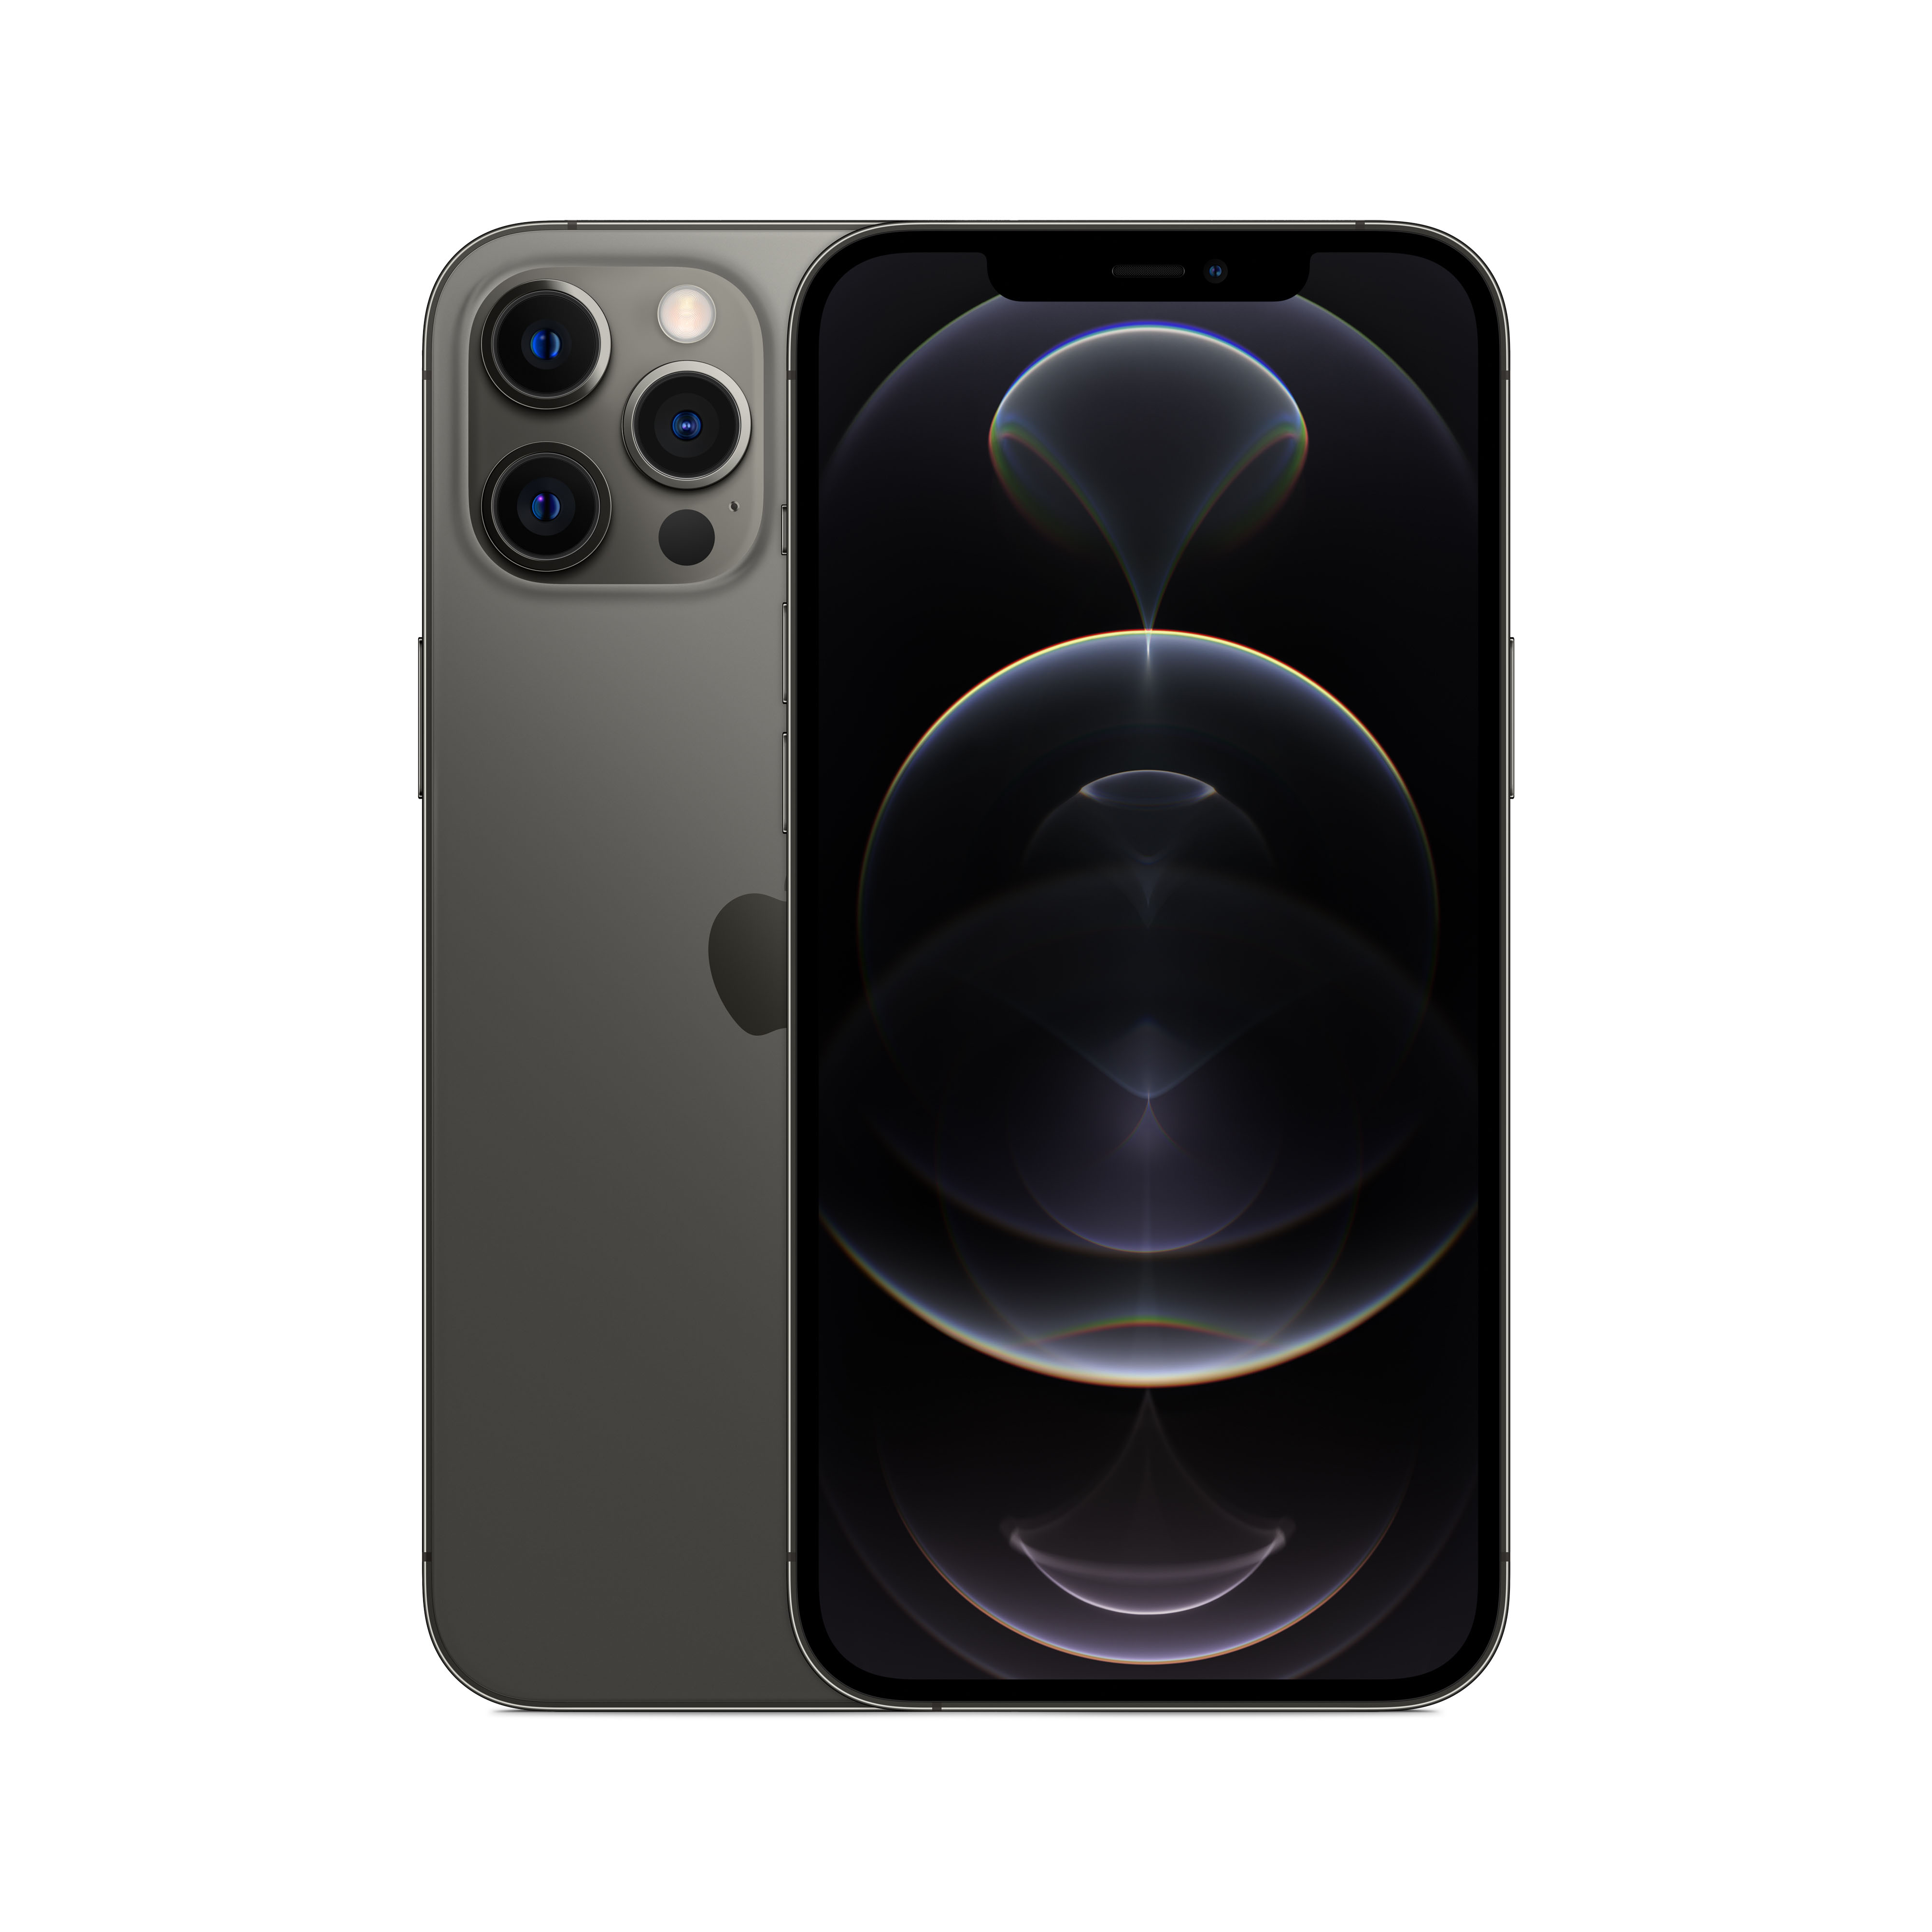 Verizon iPhone 12 Pro Max 128GB Graphite - image 1 of 9